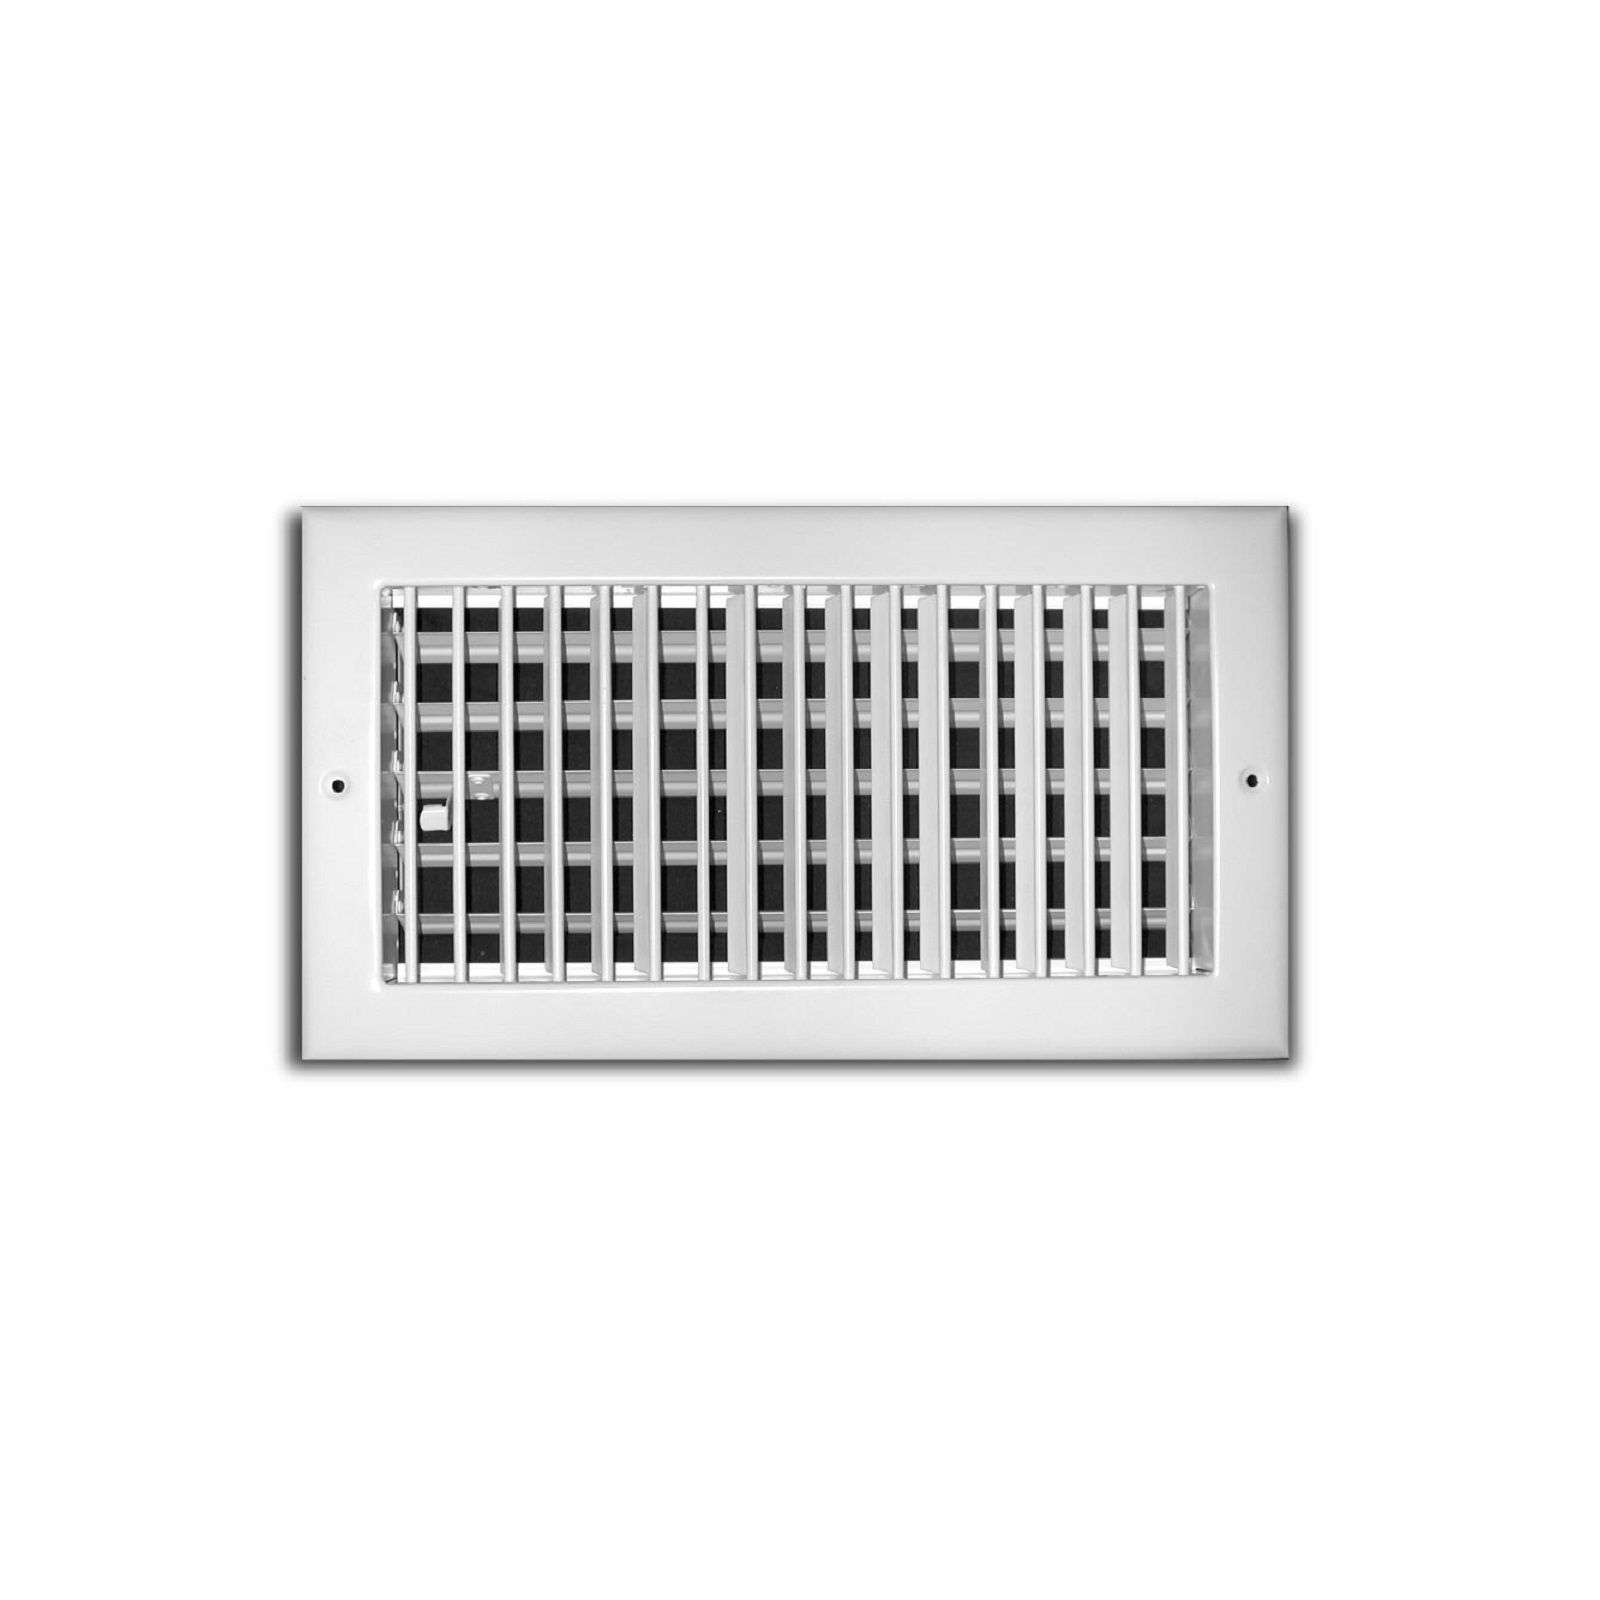 TRUaire 210VM 14X10 - Steel Adjustable 1-Way Wall/Ceiling Register With Multi Shutter Damper, White, 14" X 10"